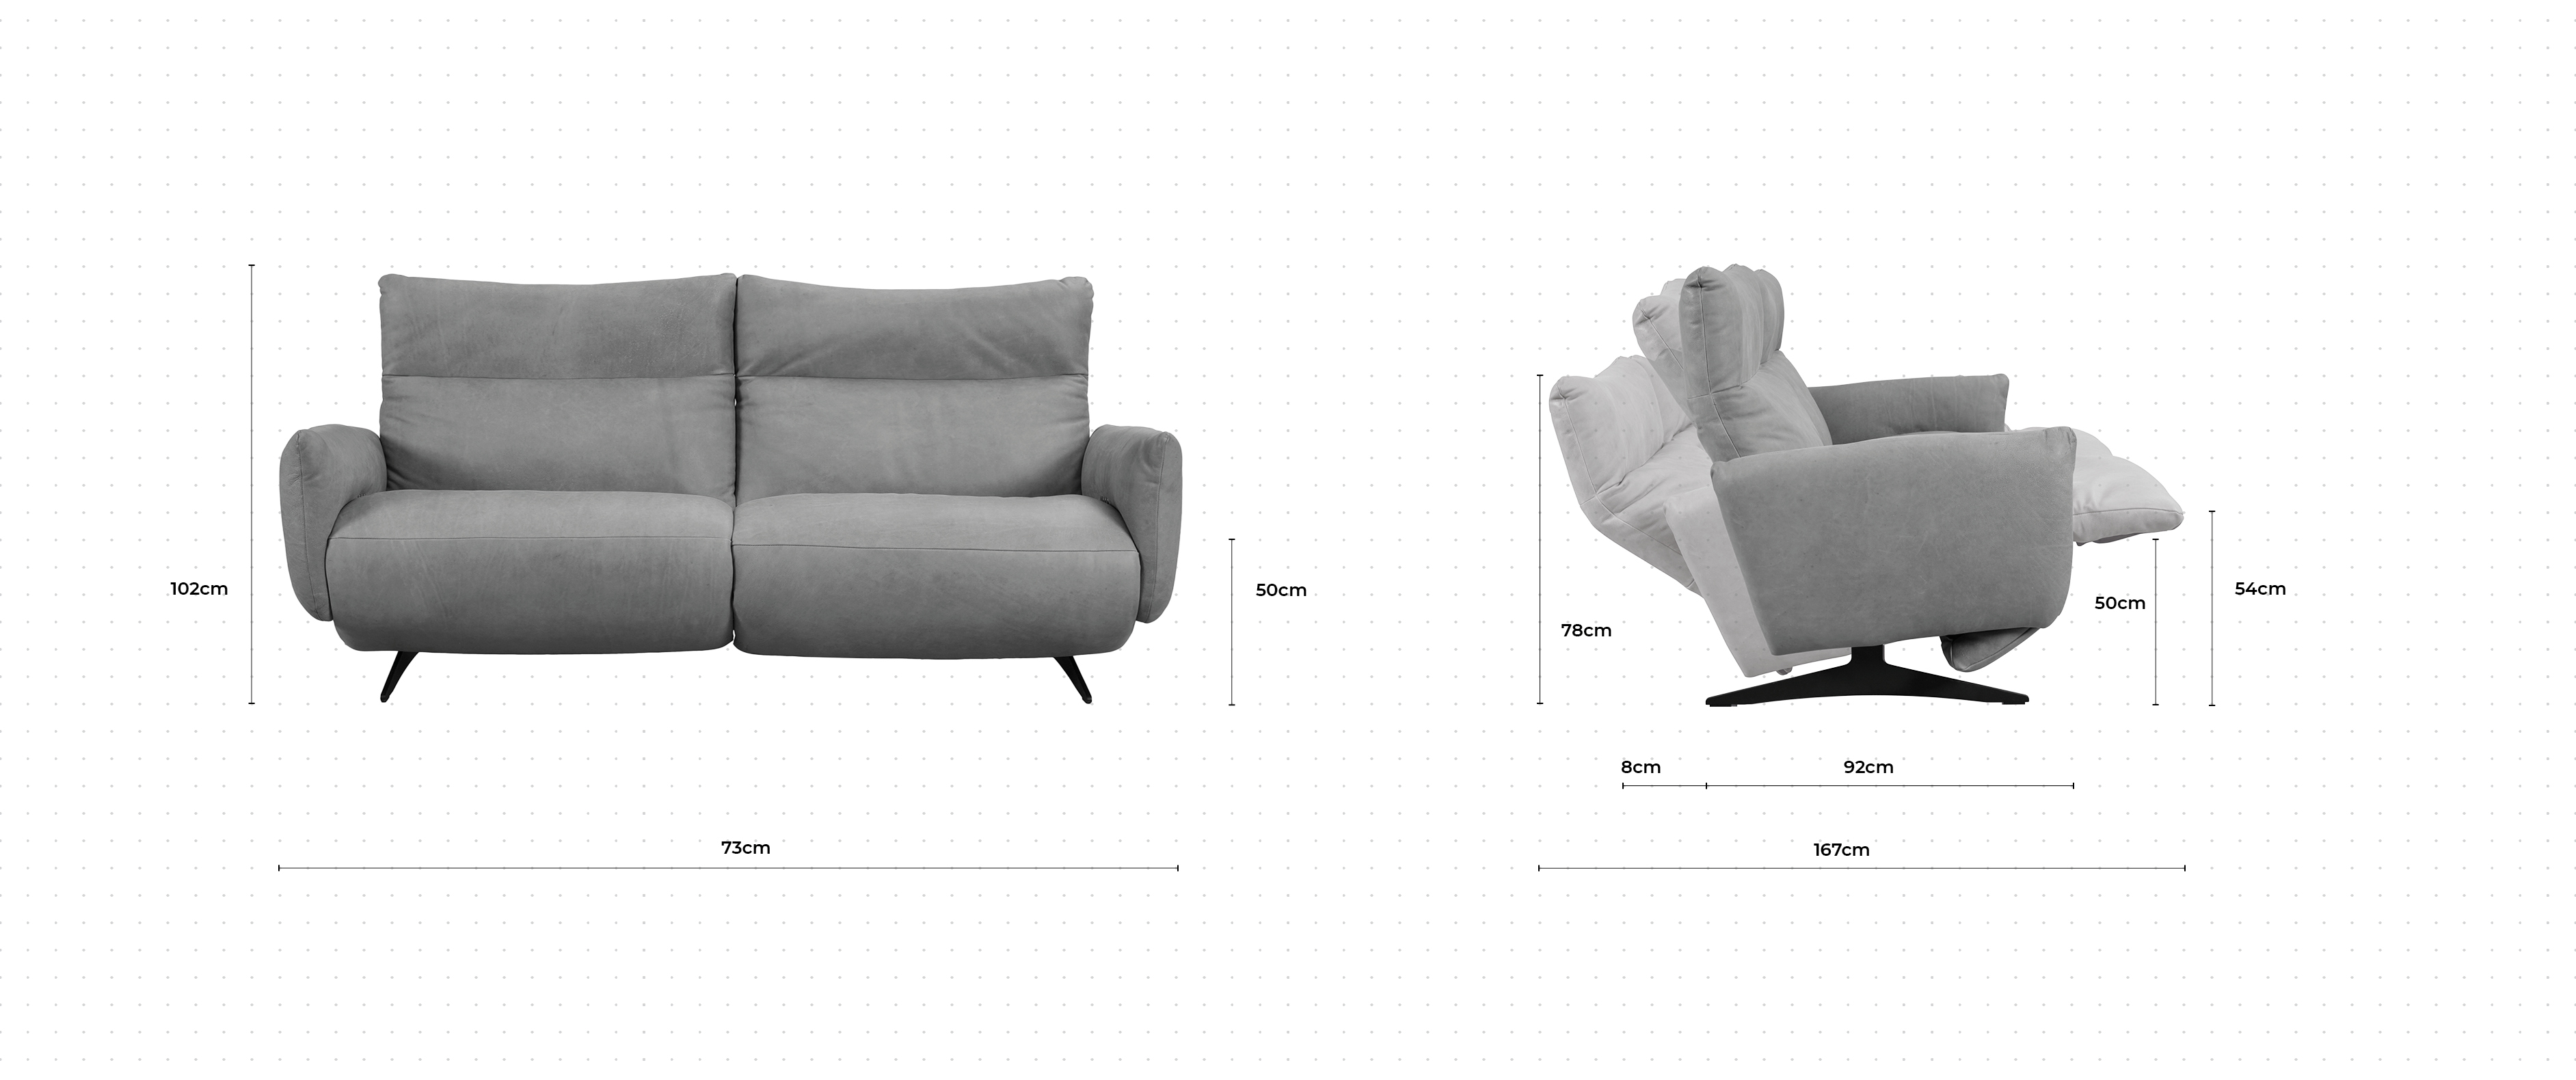 Lynch 3 Seater Sofa dimensions